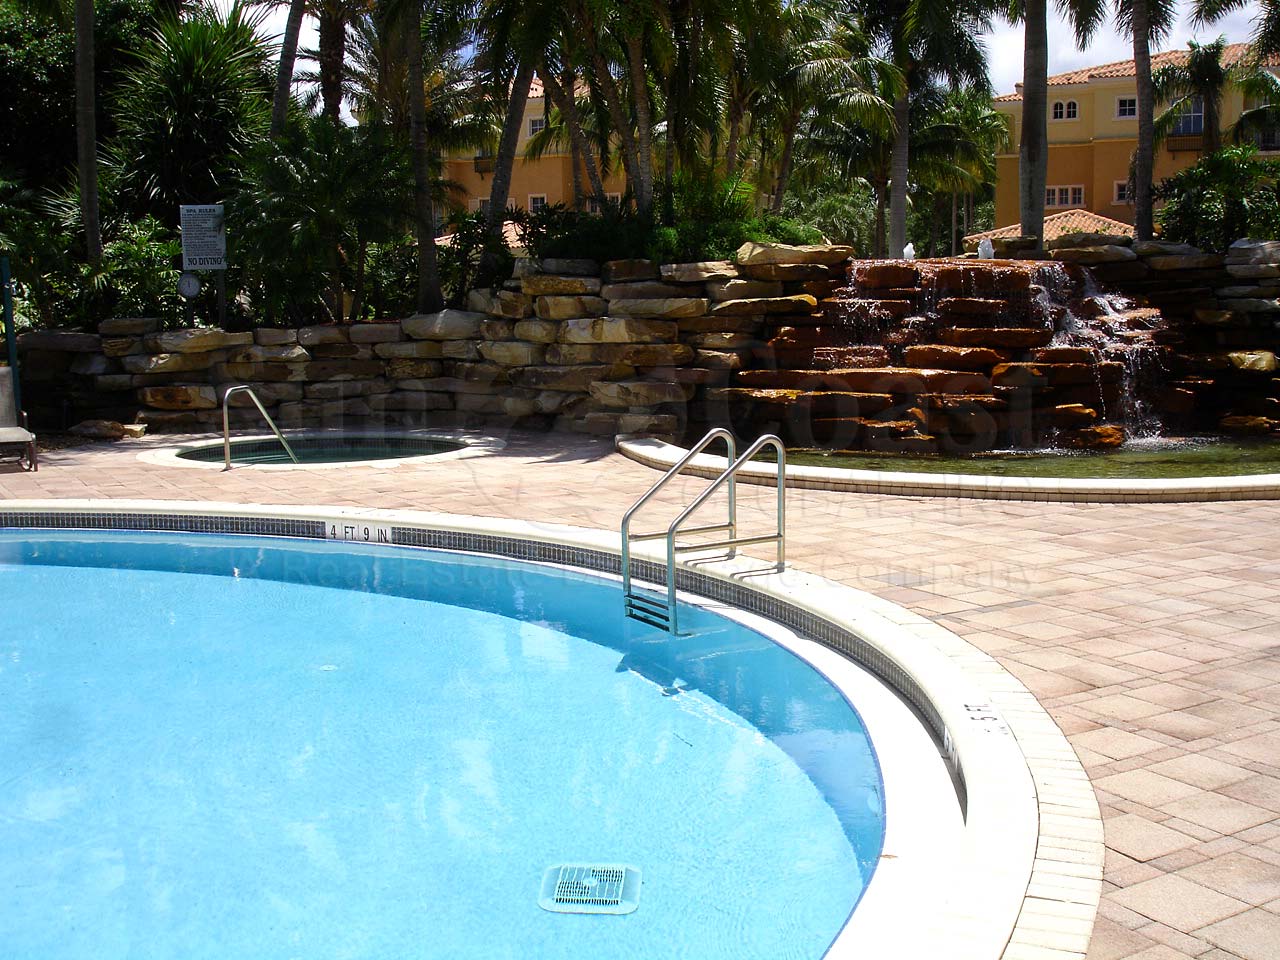 Bolero Community Pool and Fountain